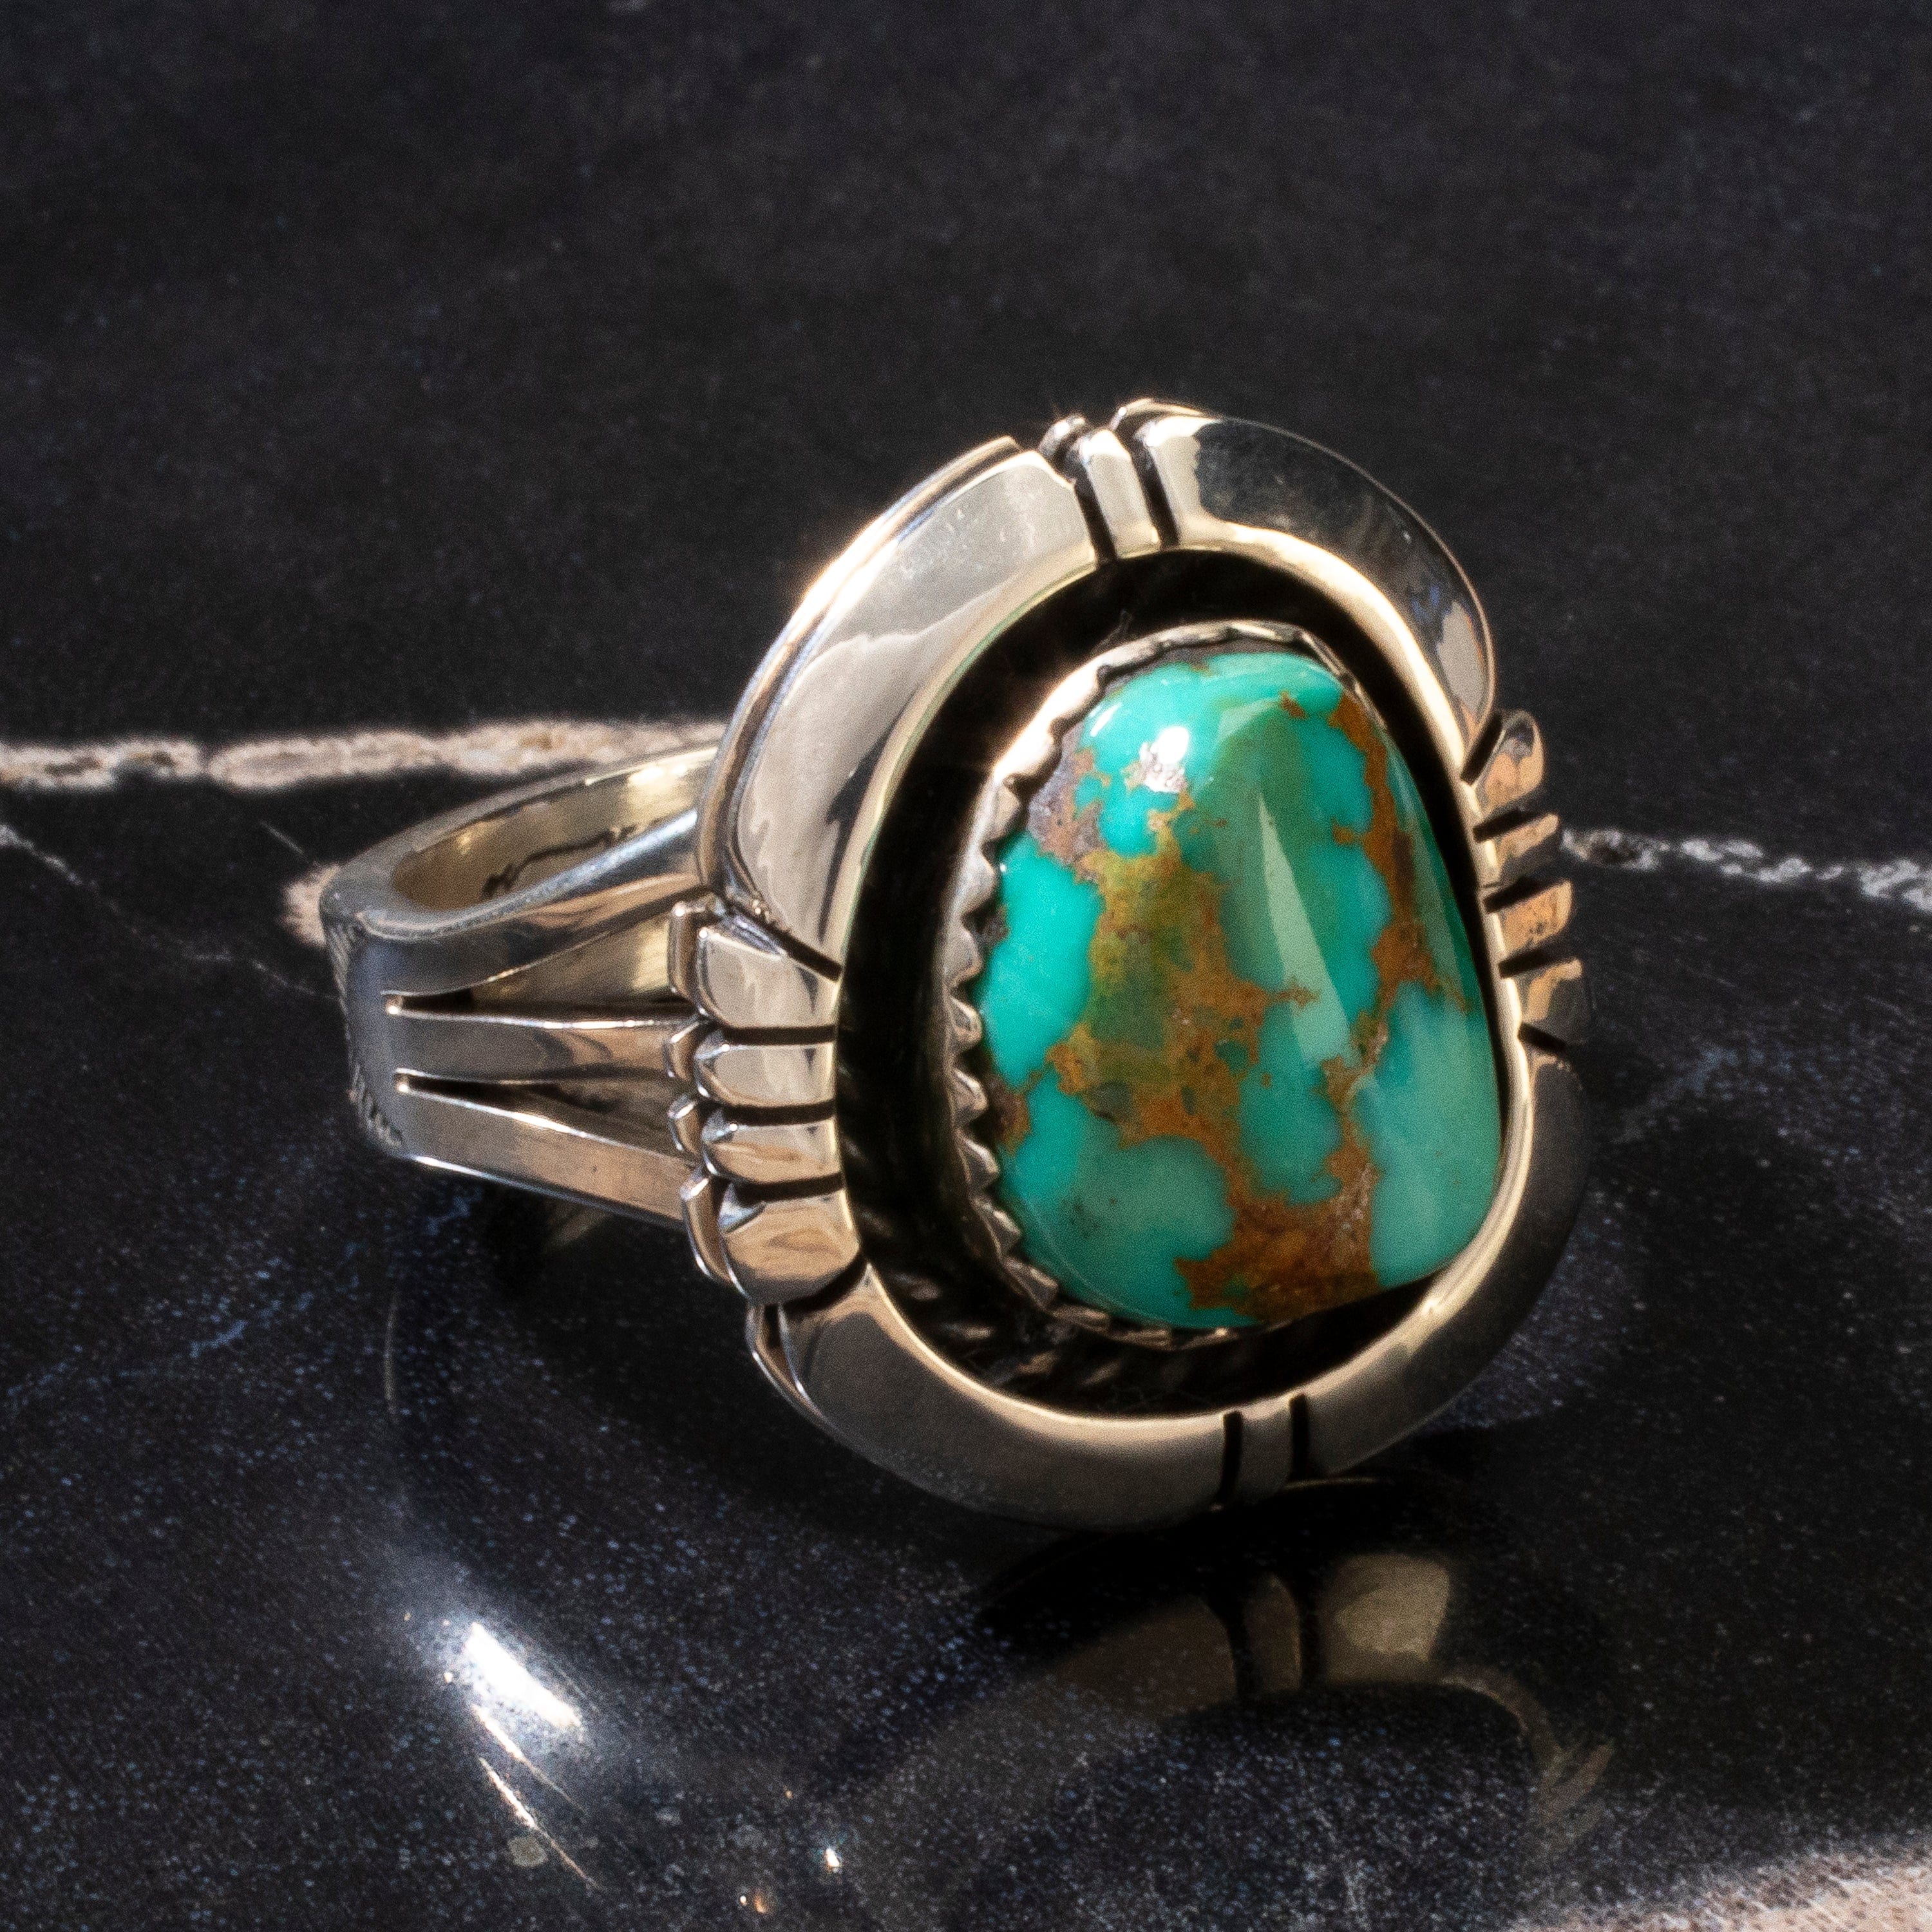 Kalifano Native American Jewelry 8 Joe Piaso Jr. King Manassa Turquoise Navajo USA Native American Made 925 Sterling Silver Ring NAR600.076.8